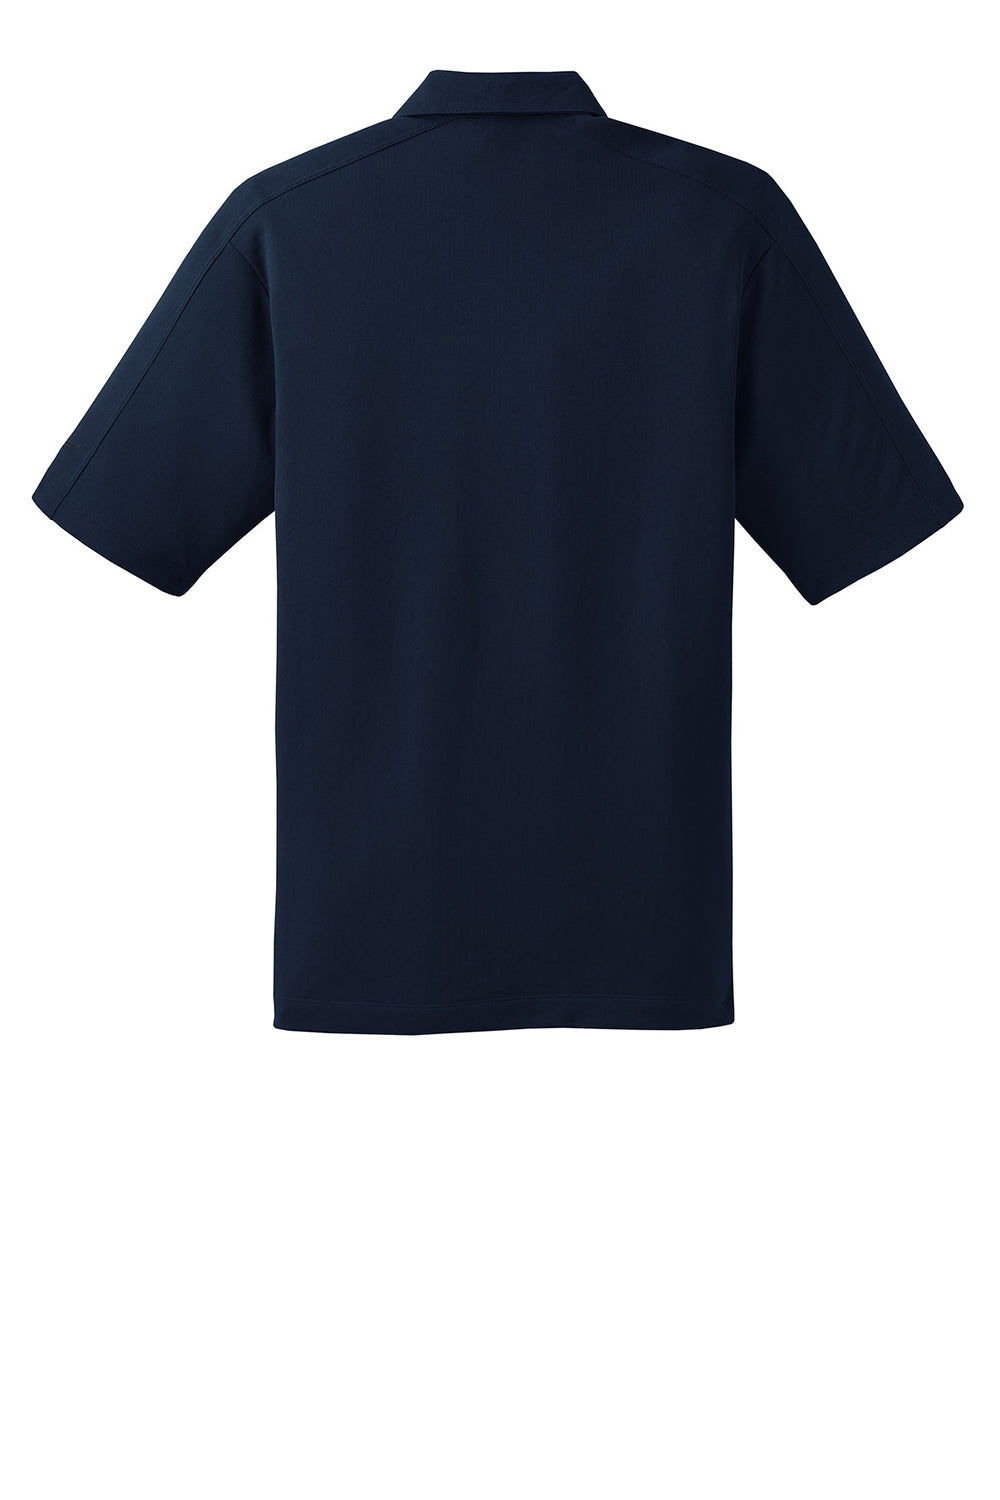 Nike 266998 Mens Tech Sport Dri-Fit Moisture Wicking Short Sleeve Polo Shirt Navy Blue Flat Back